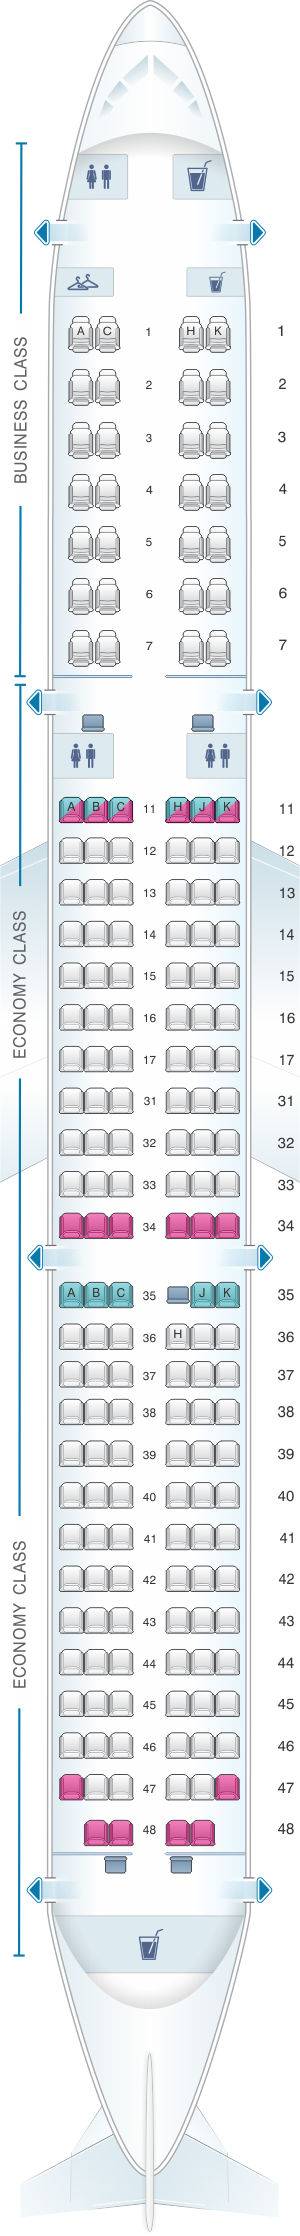 Airbus A321 Neo Seating Plan